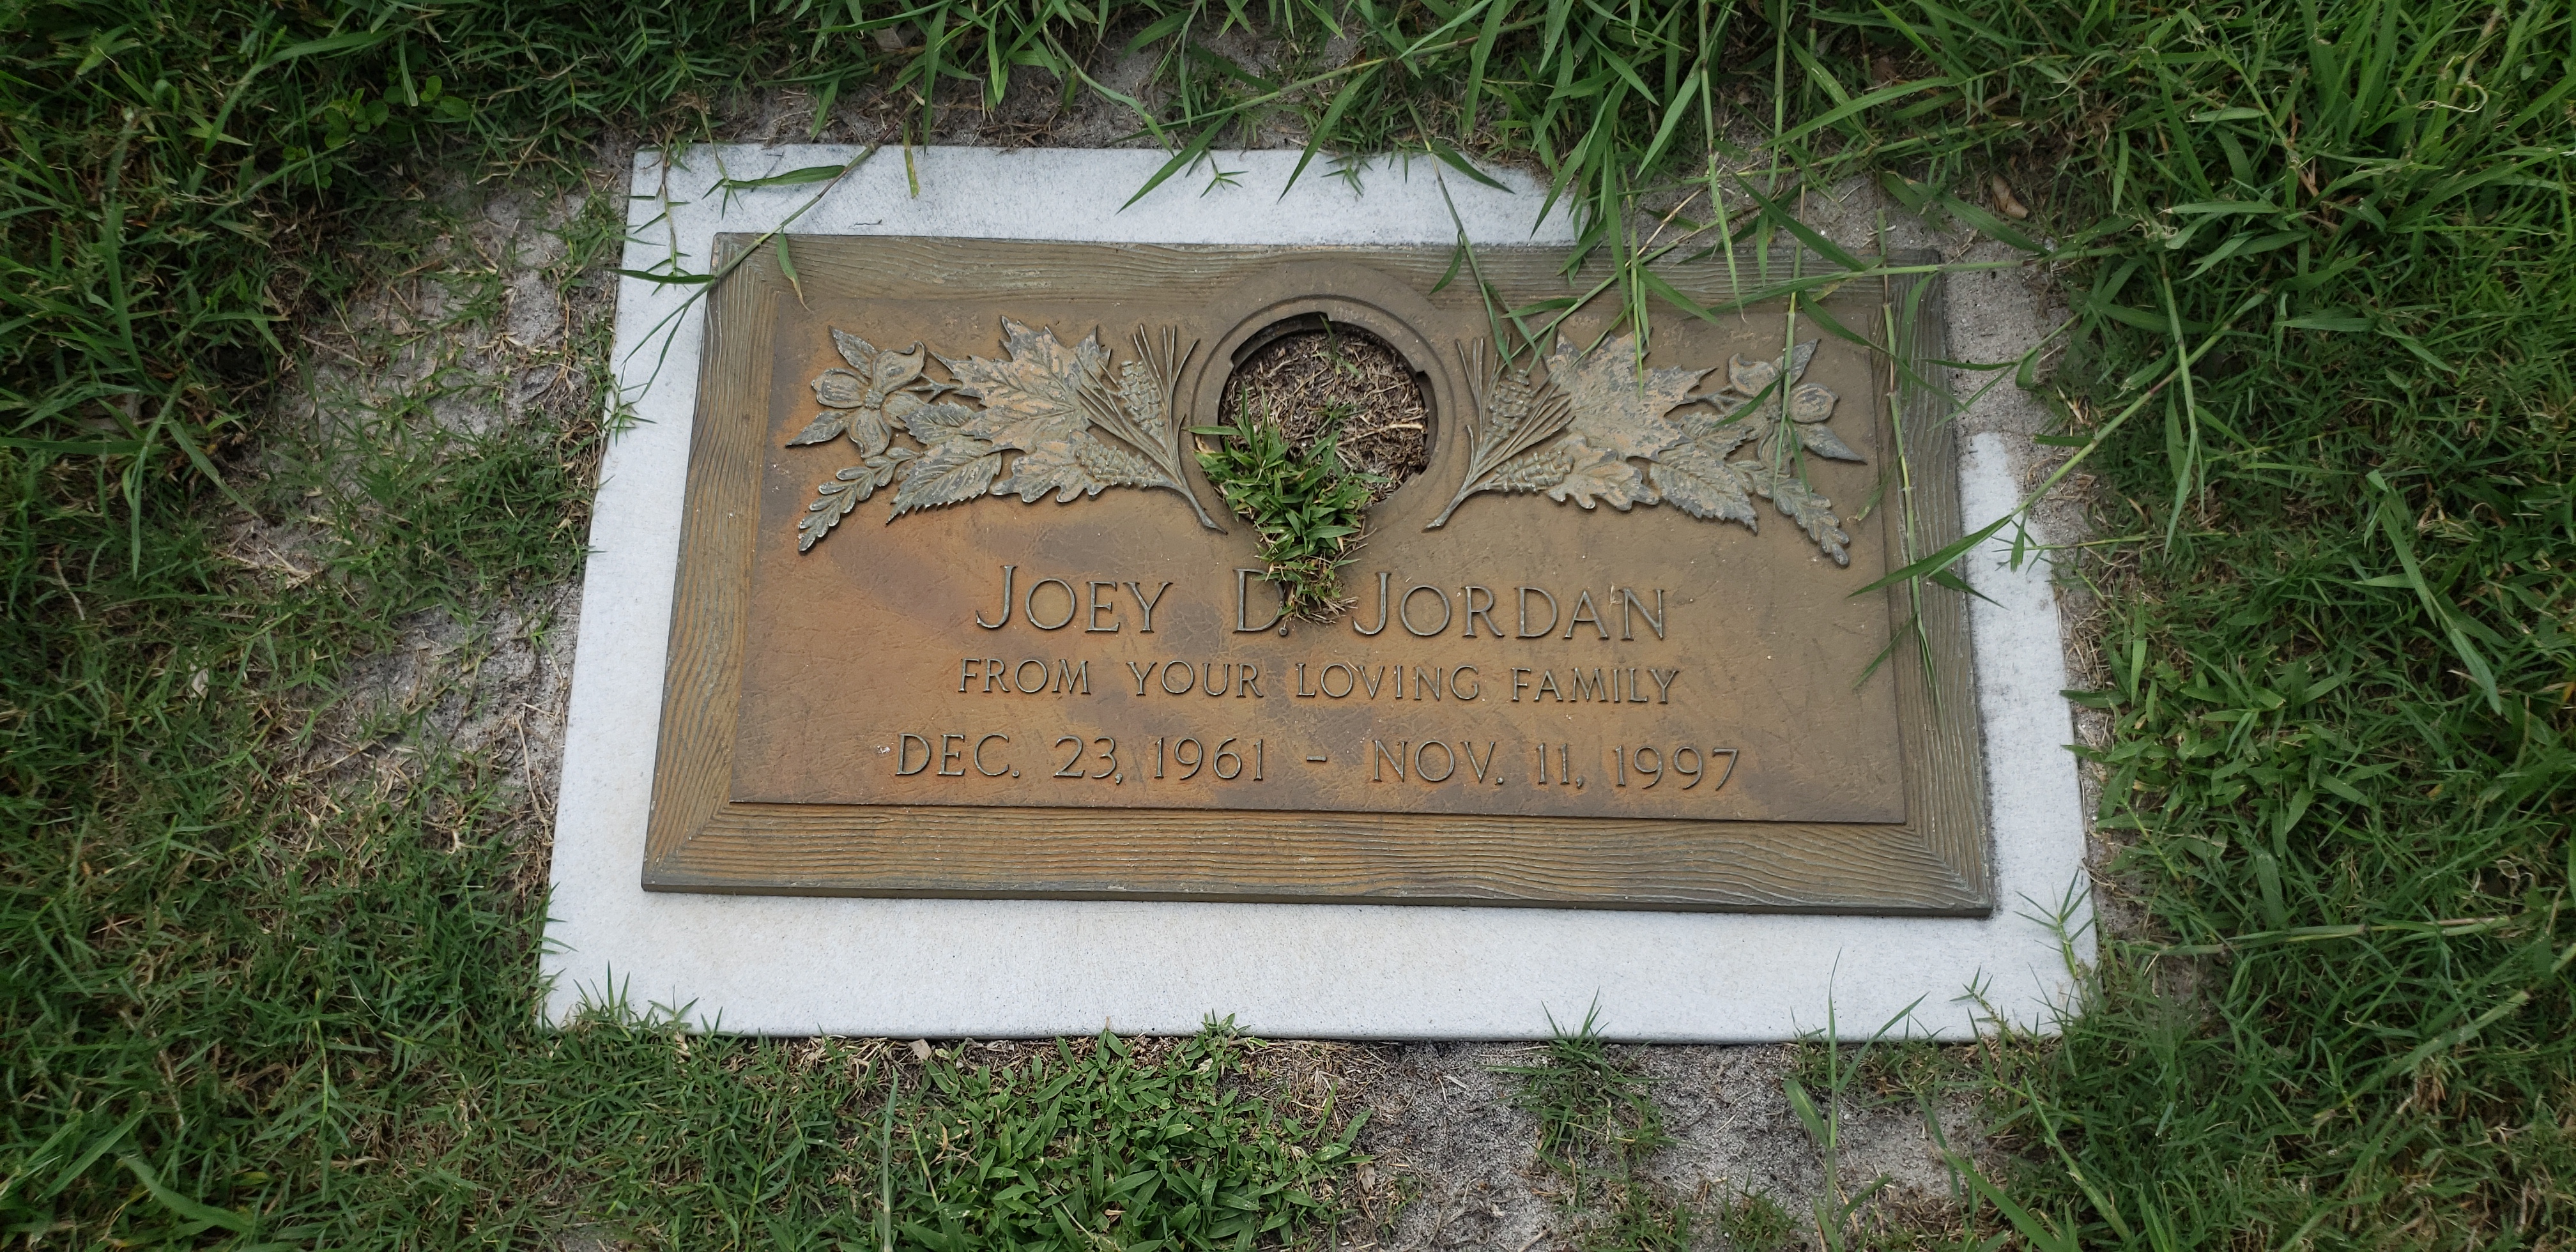 Joey D Jordan